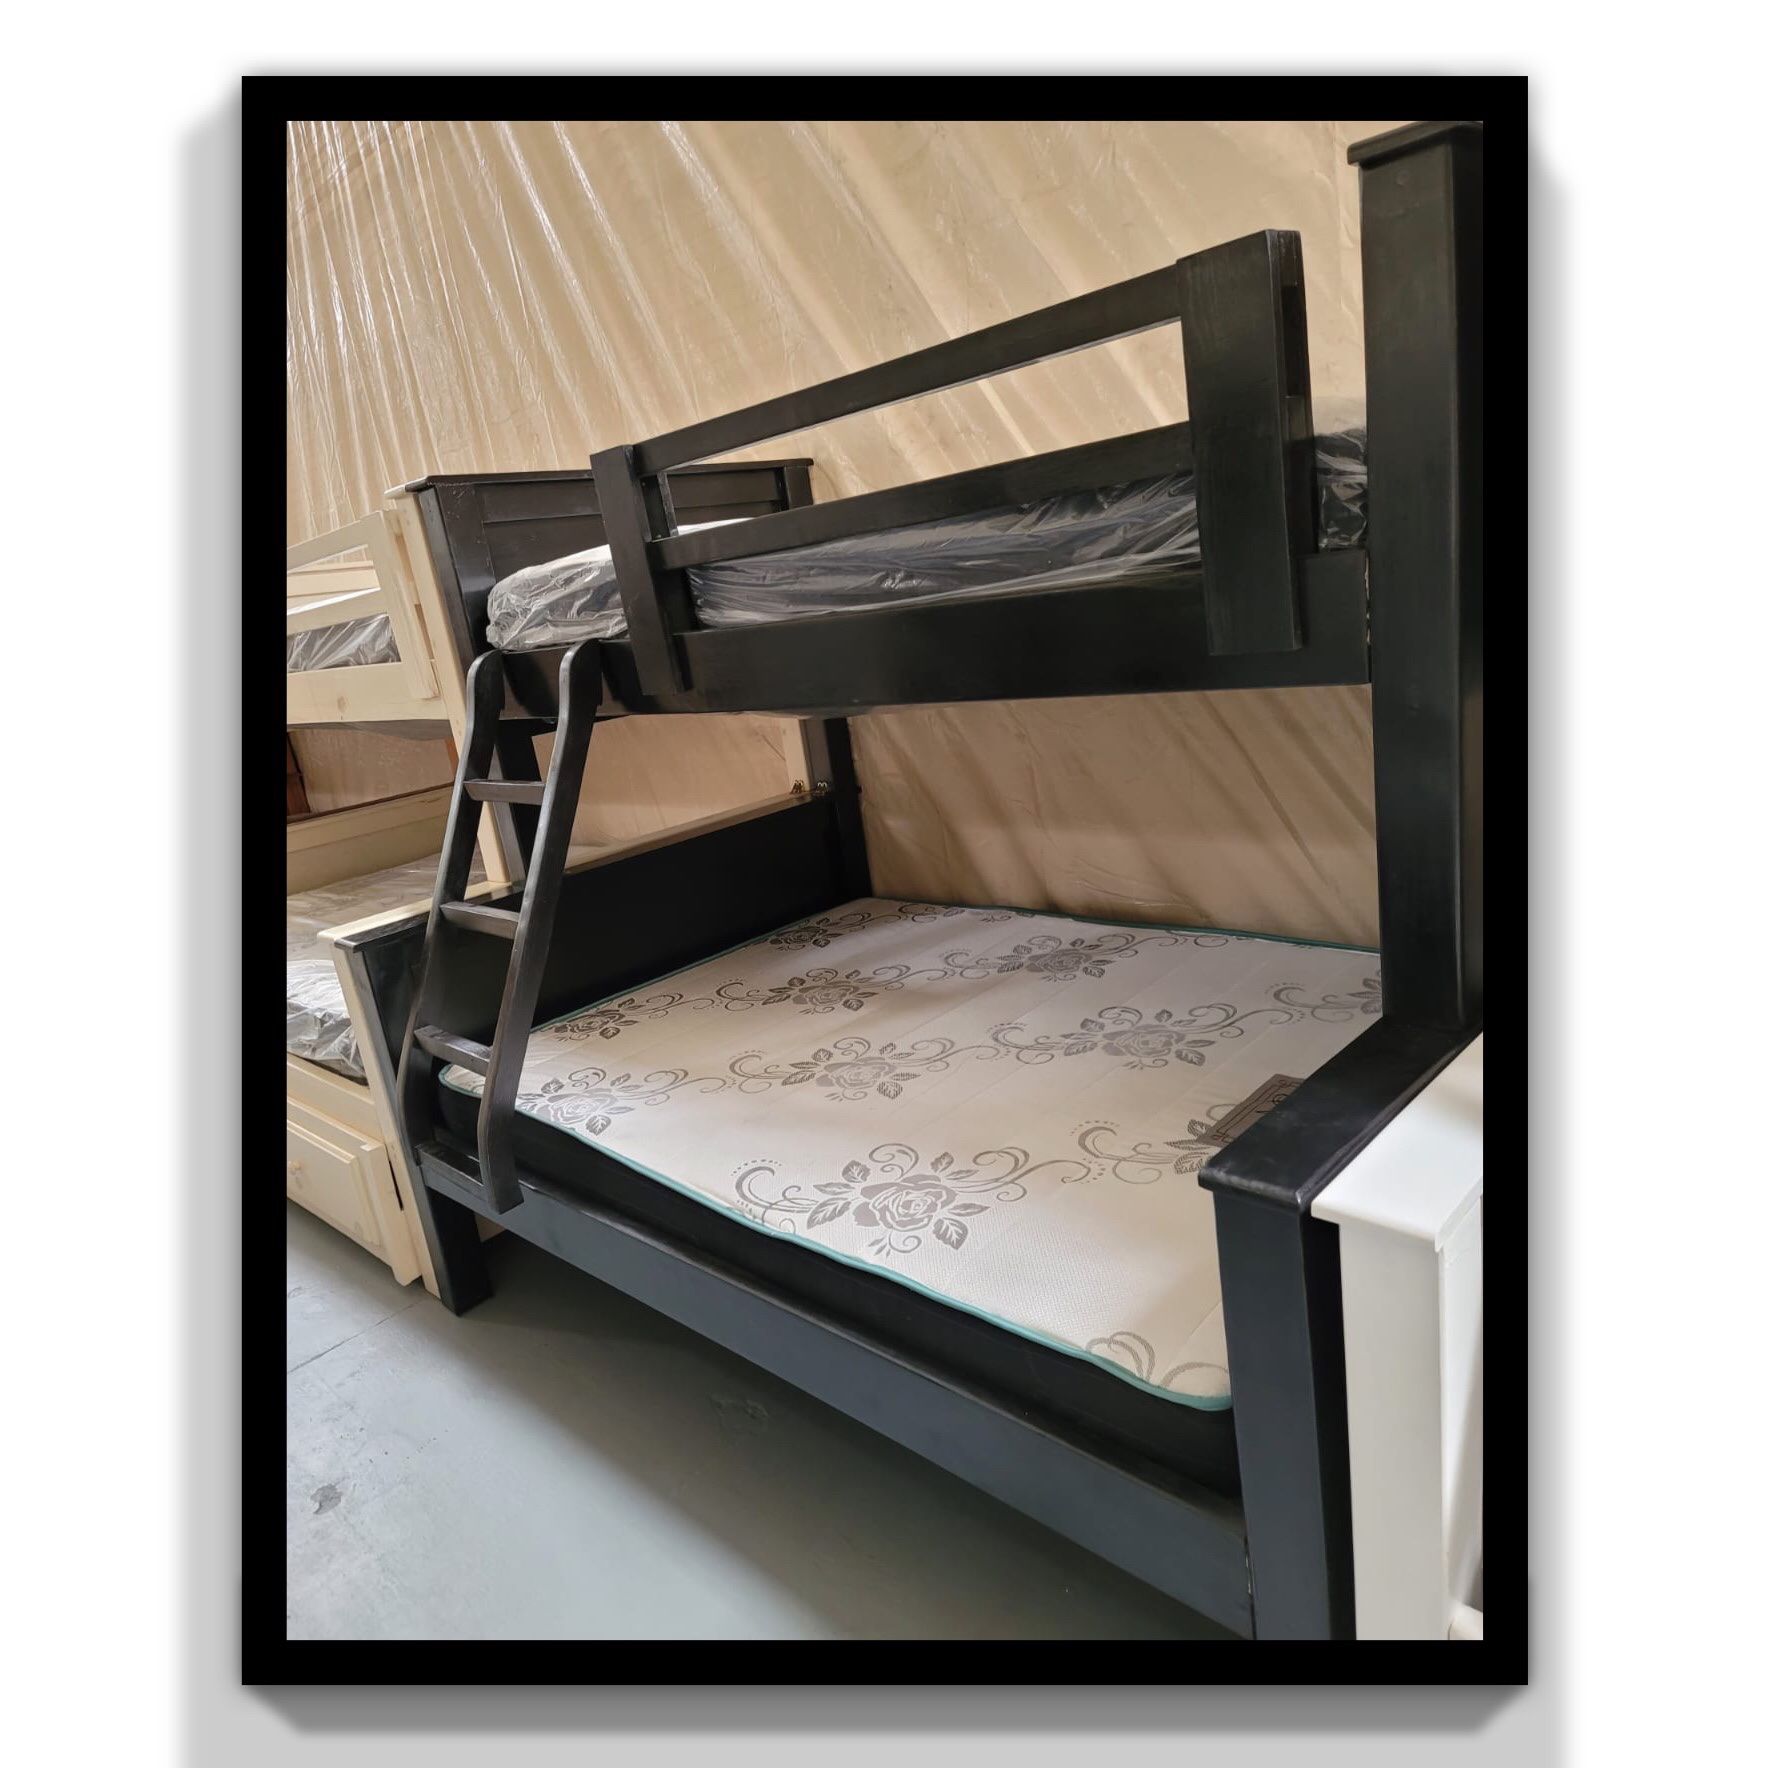 De Pino Twin Full Con Colchones Incluidos / Bed for Sale in Grand Terrace, CA - OfferUp